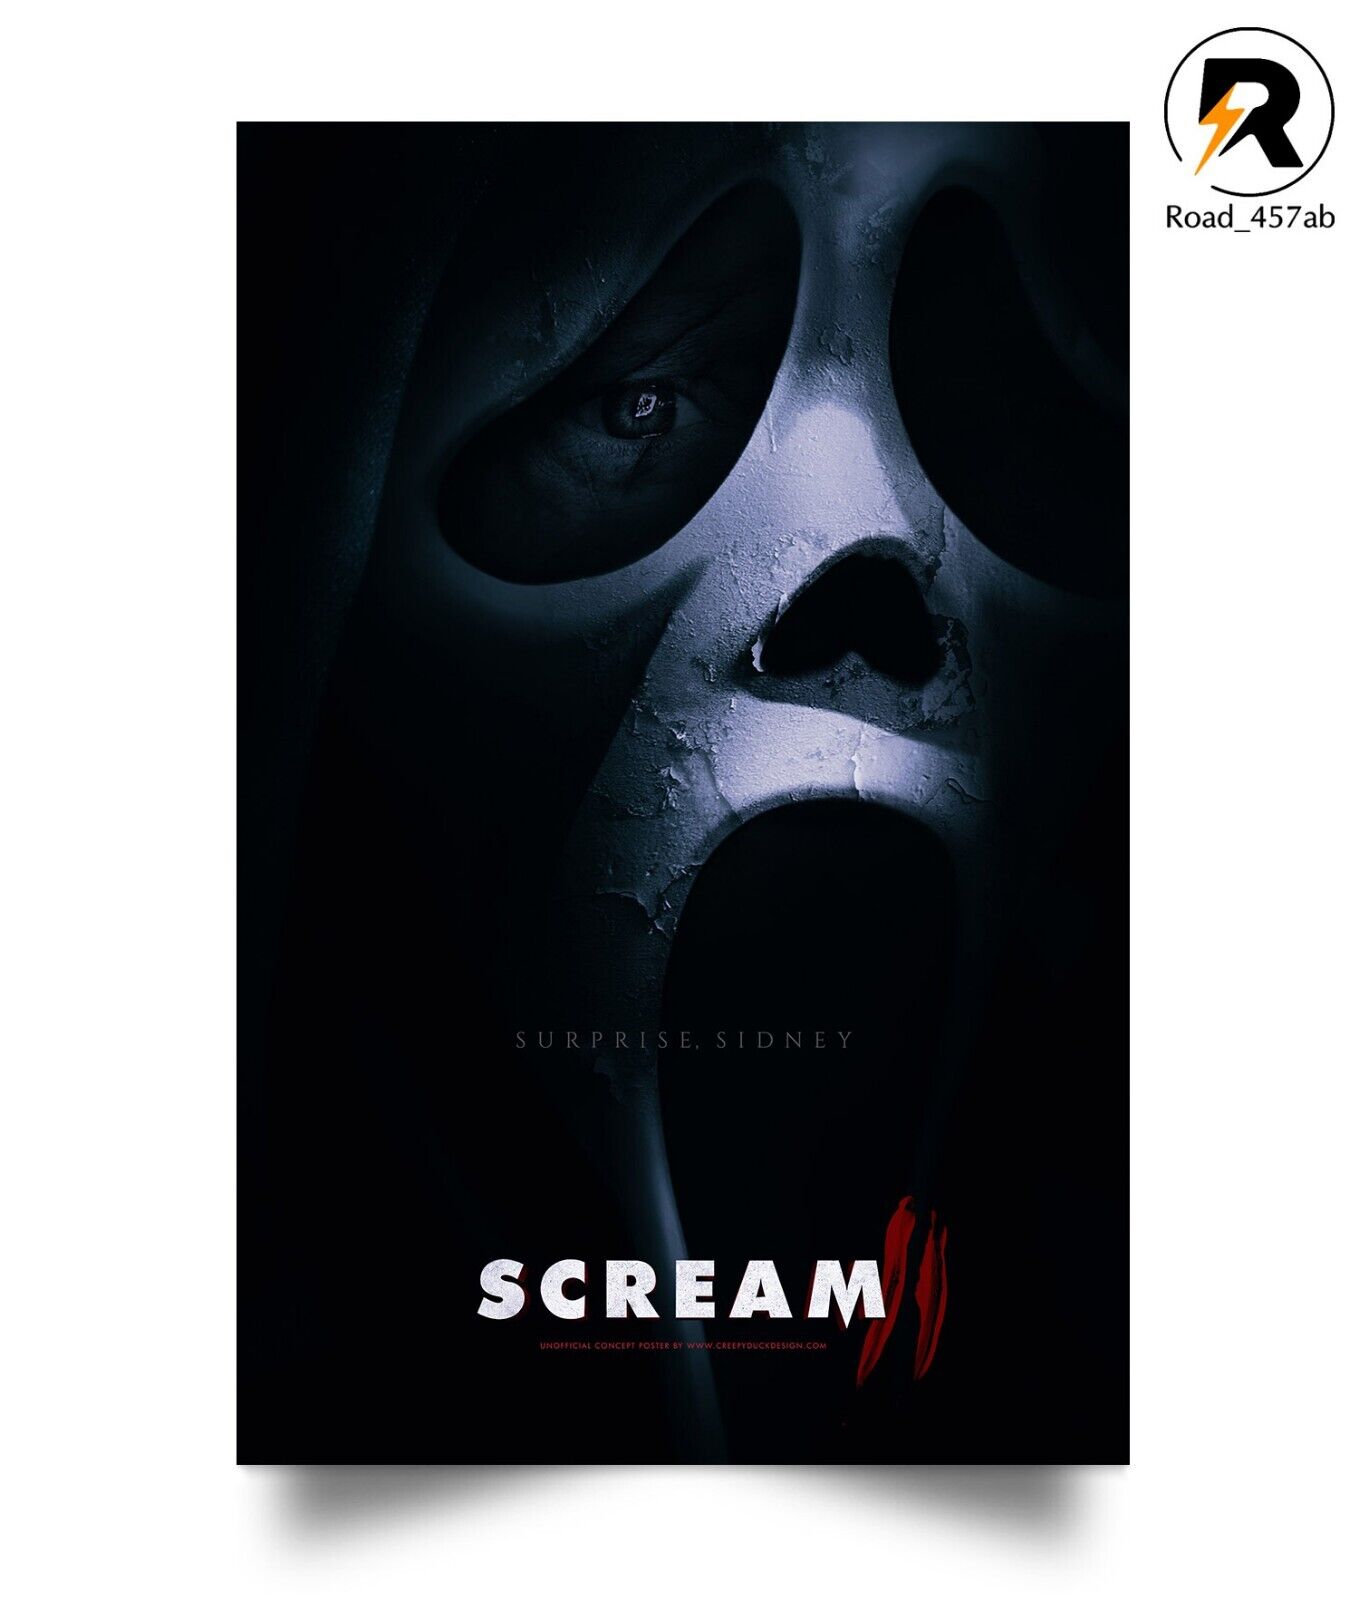 New Scream VI 4DX Poster Released